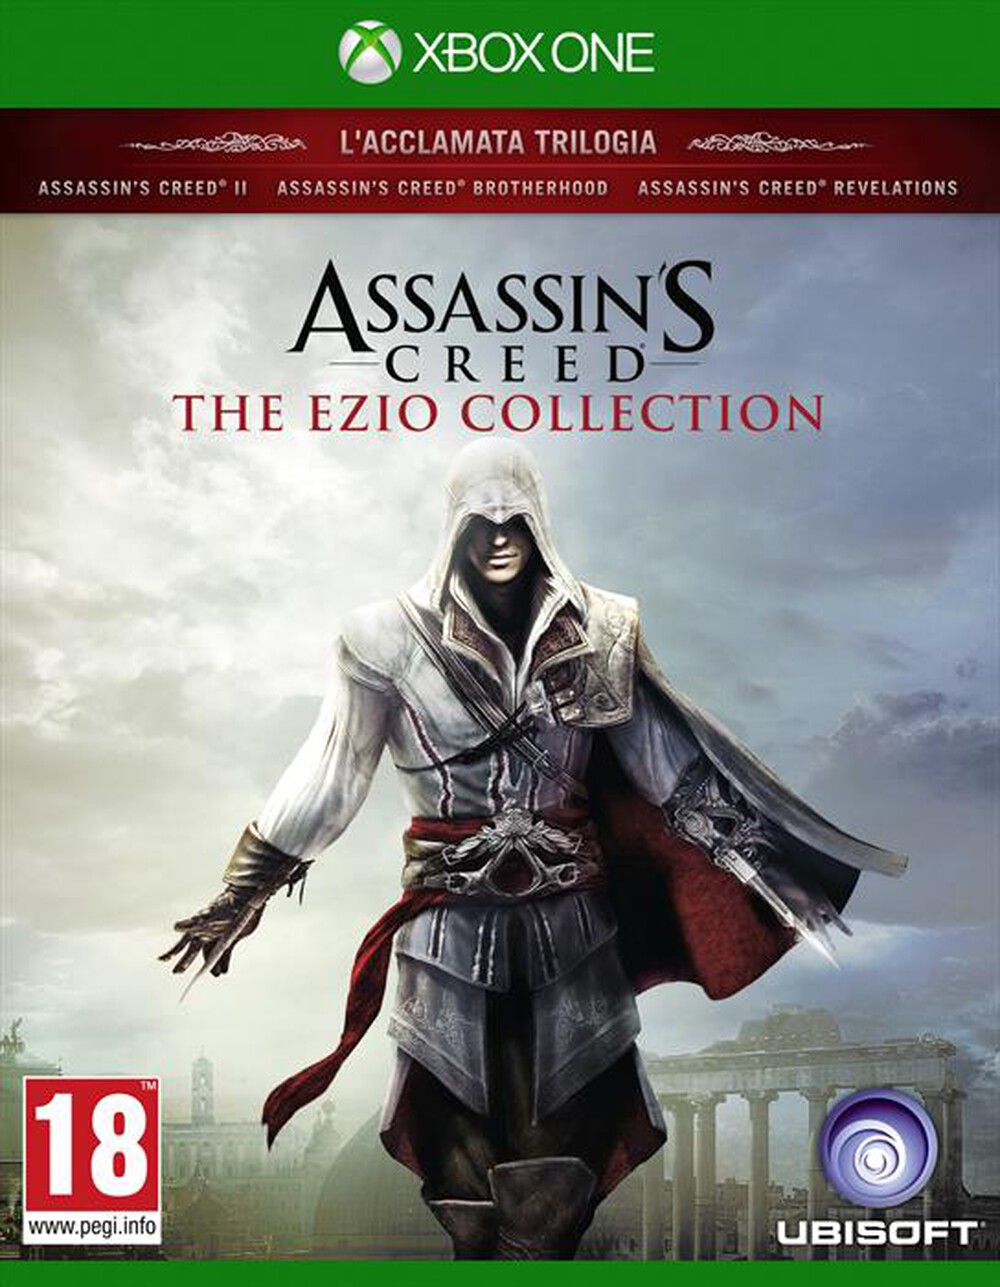 "UBISOFT - Assassin's Creed - The Ezio Collection Xbox One"